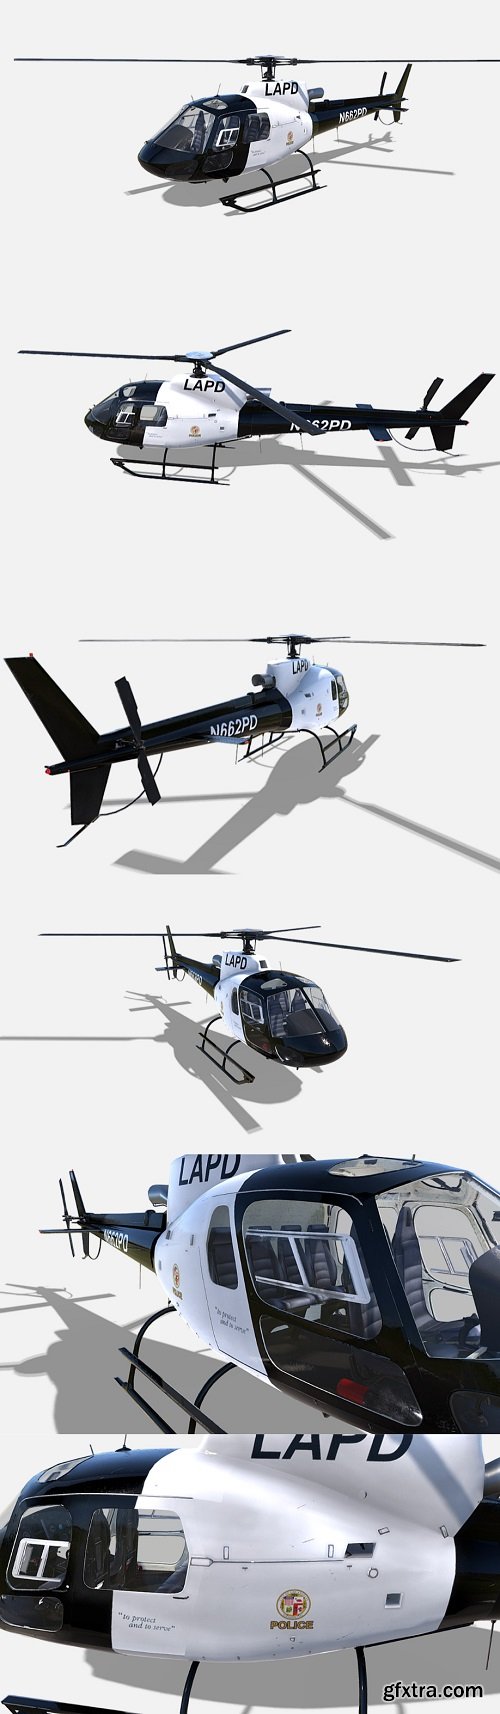 PBR Eurocopter